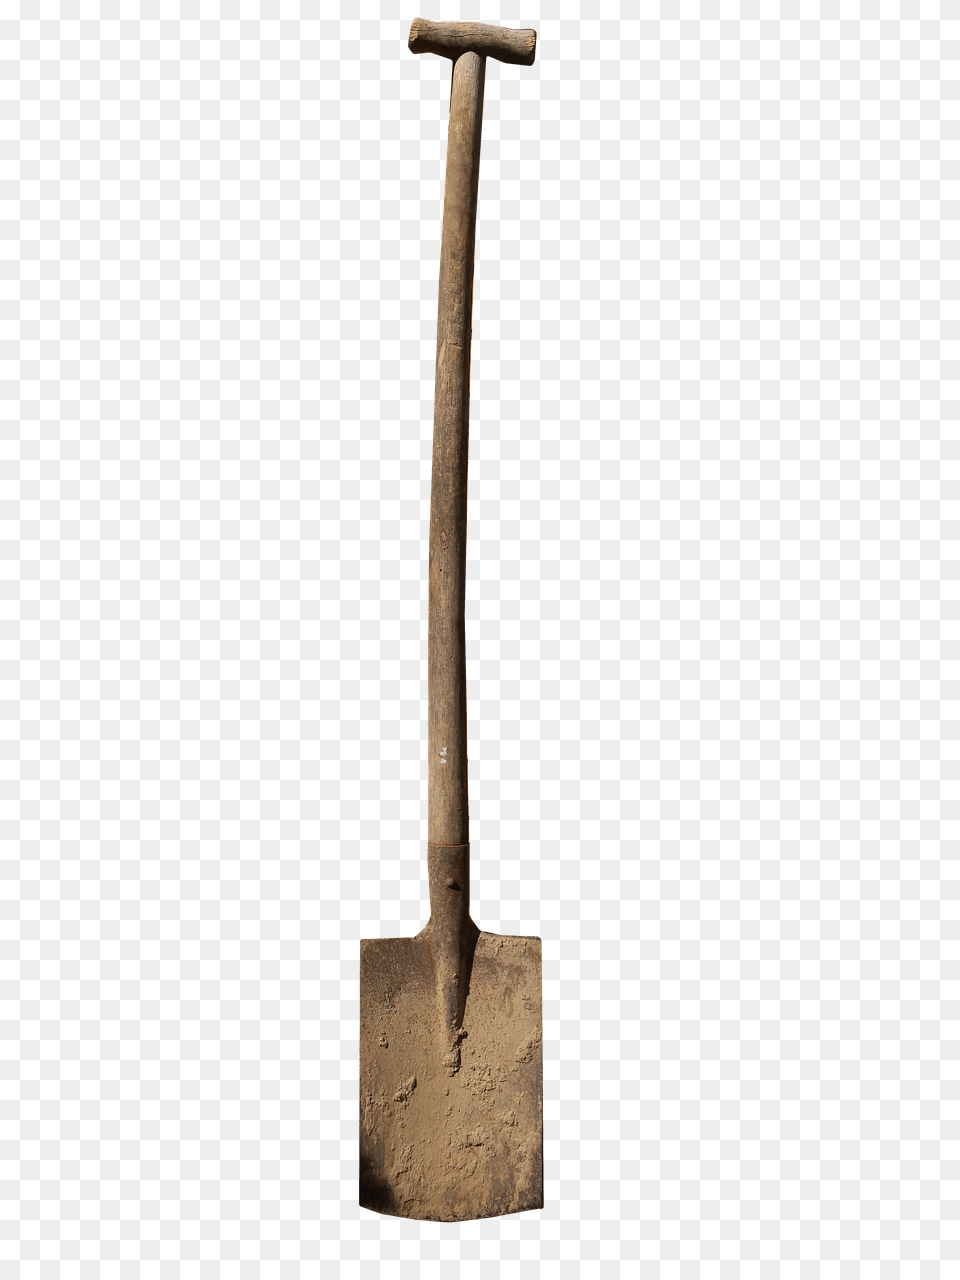 Spade, Device, Shovel, Tool Png Image